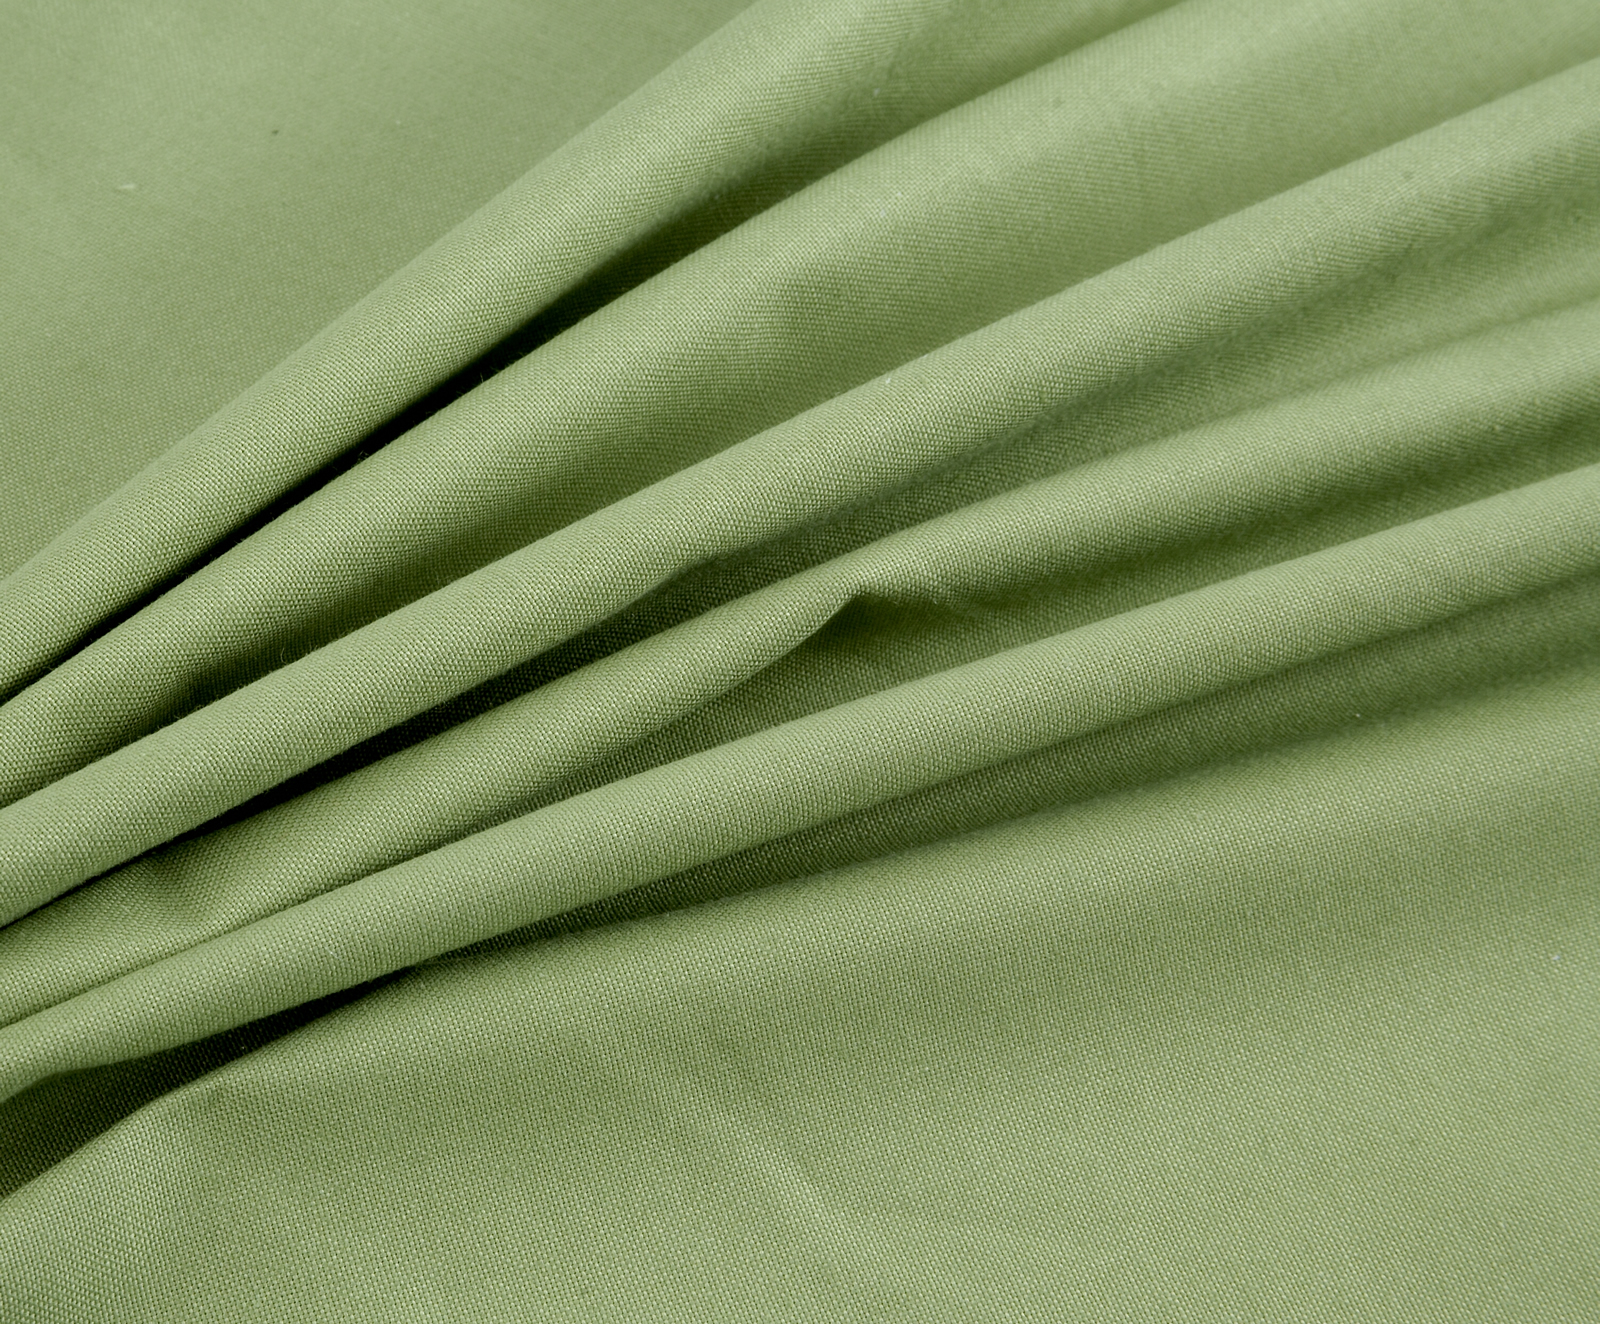 Deluxe Soft Canvas - Apple Green (price per half metre)